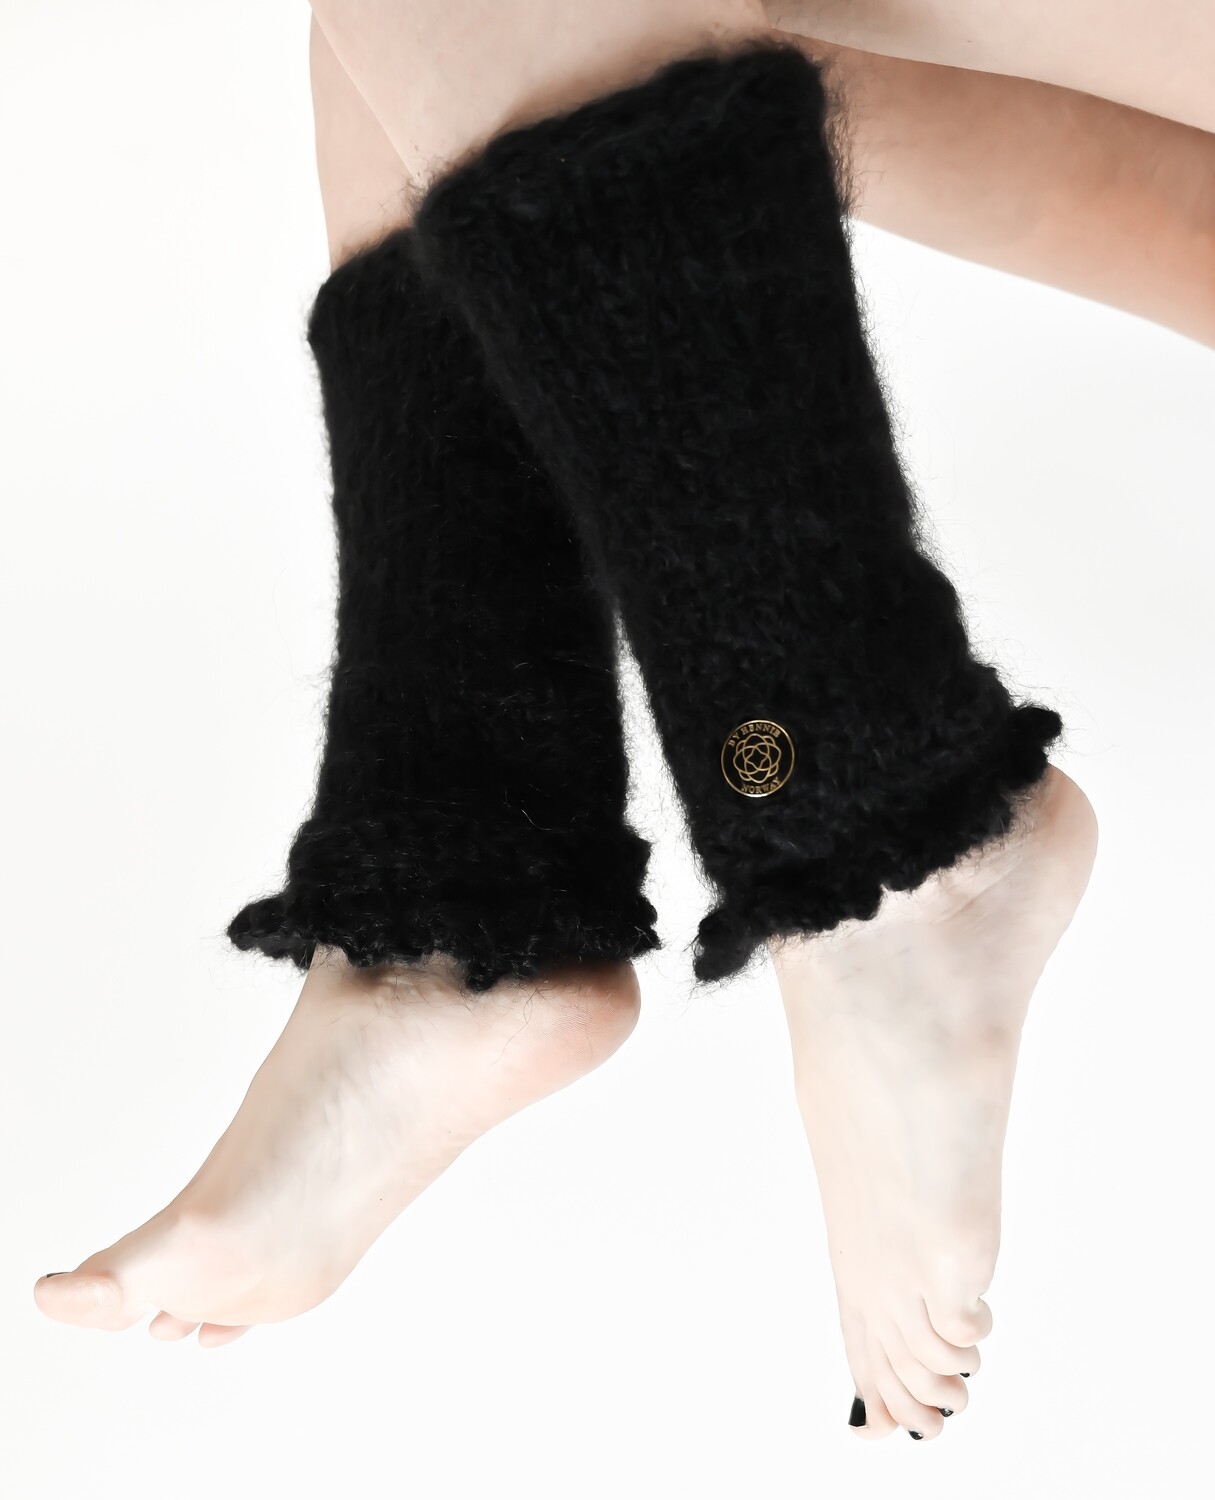 INGRID legg varmere / leg warmers black, exclusive collection.